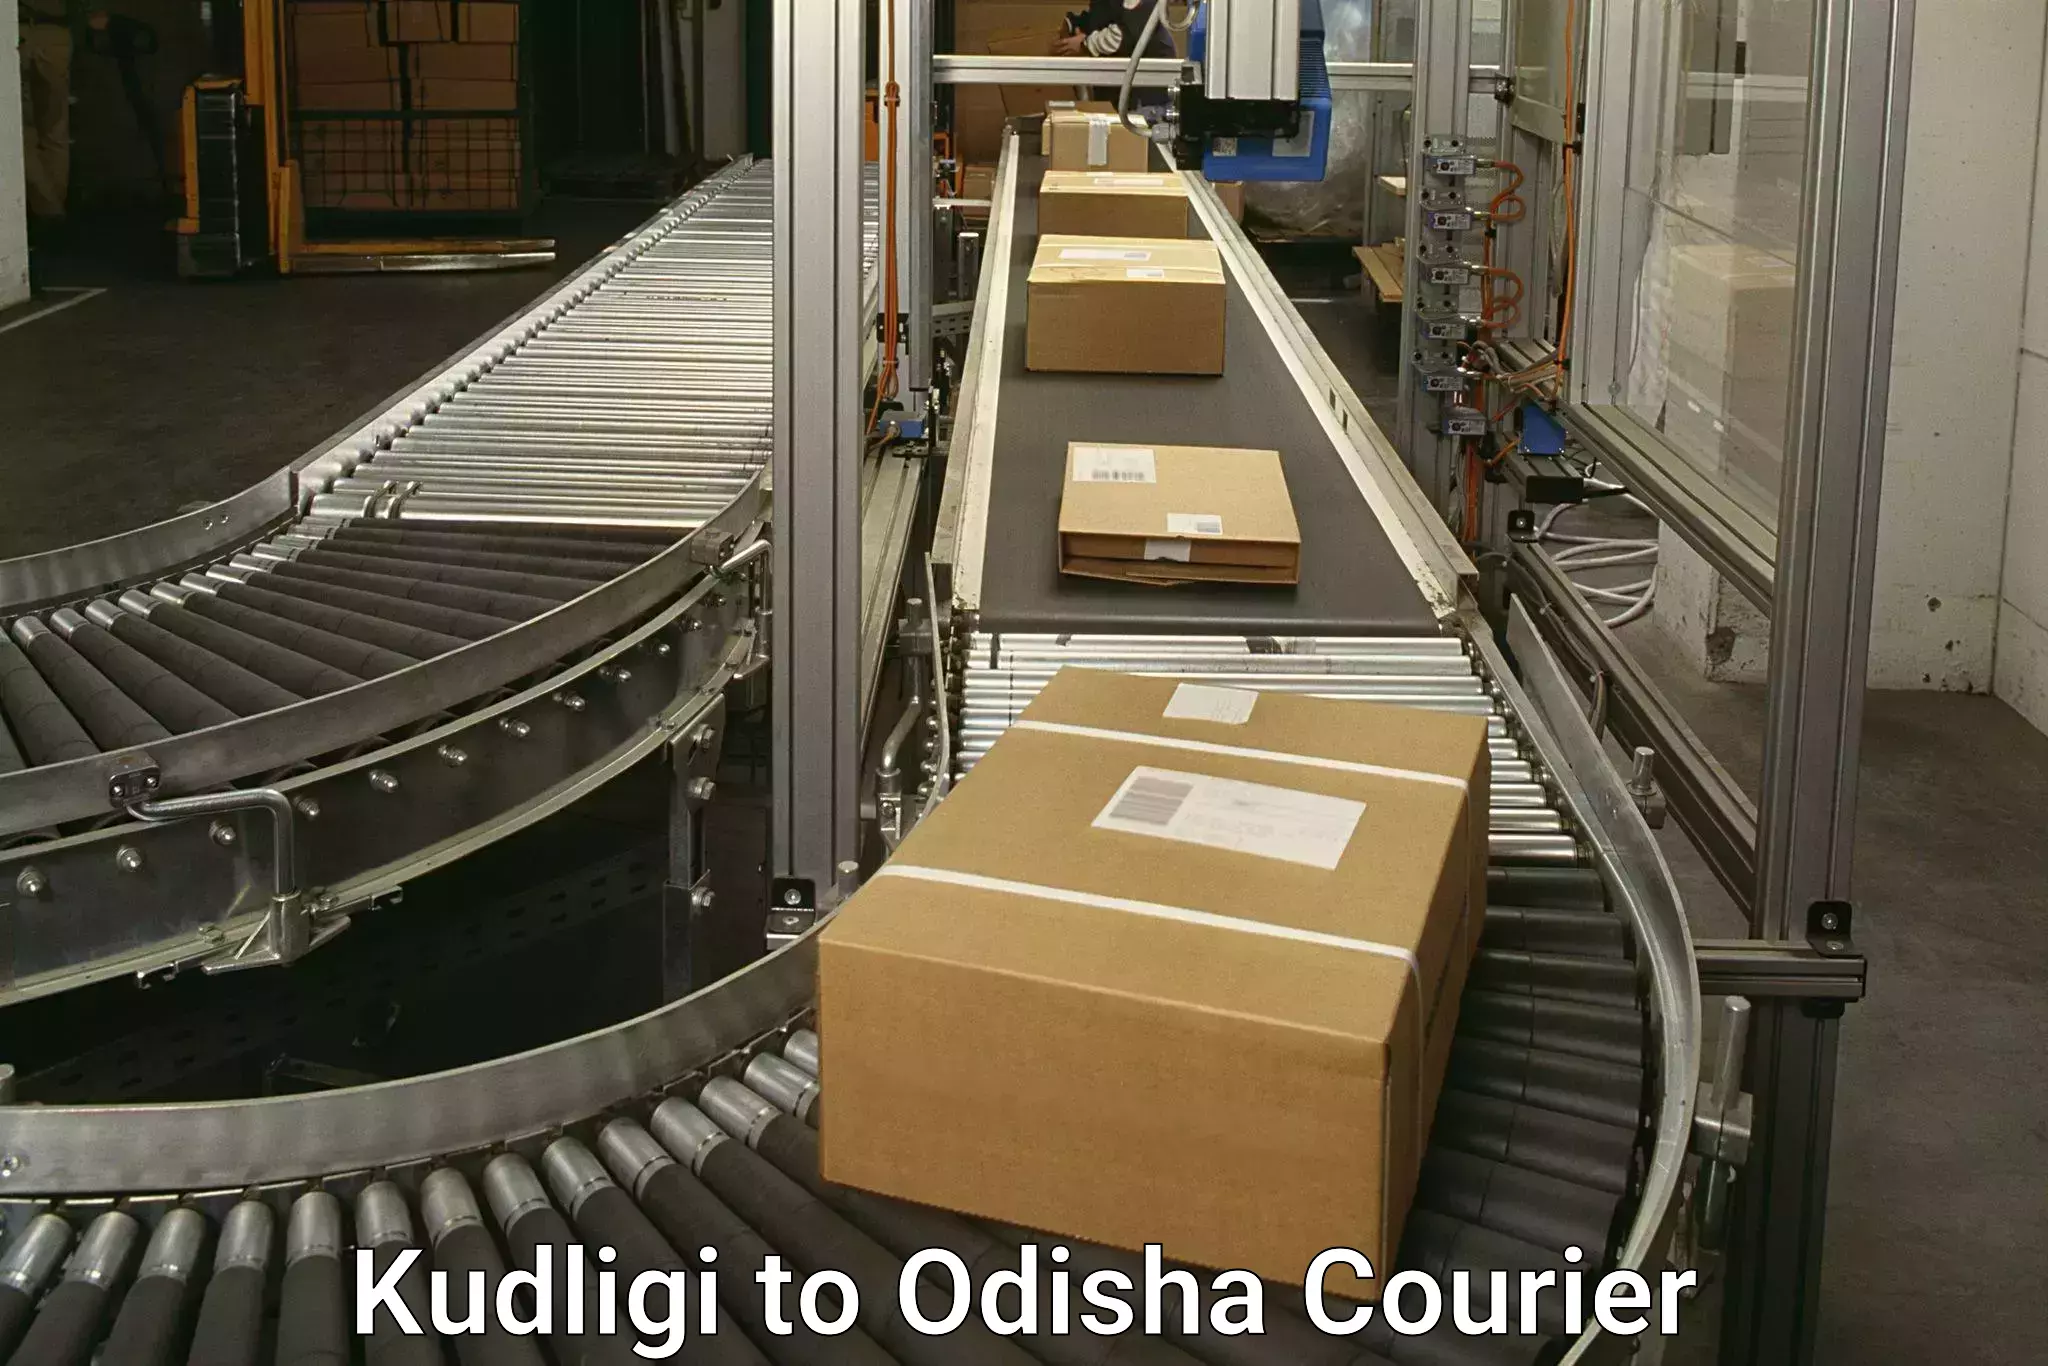 Courier service comparison Kudligi to Kesinga